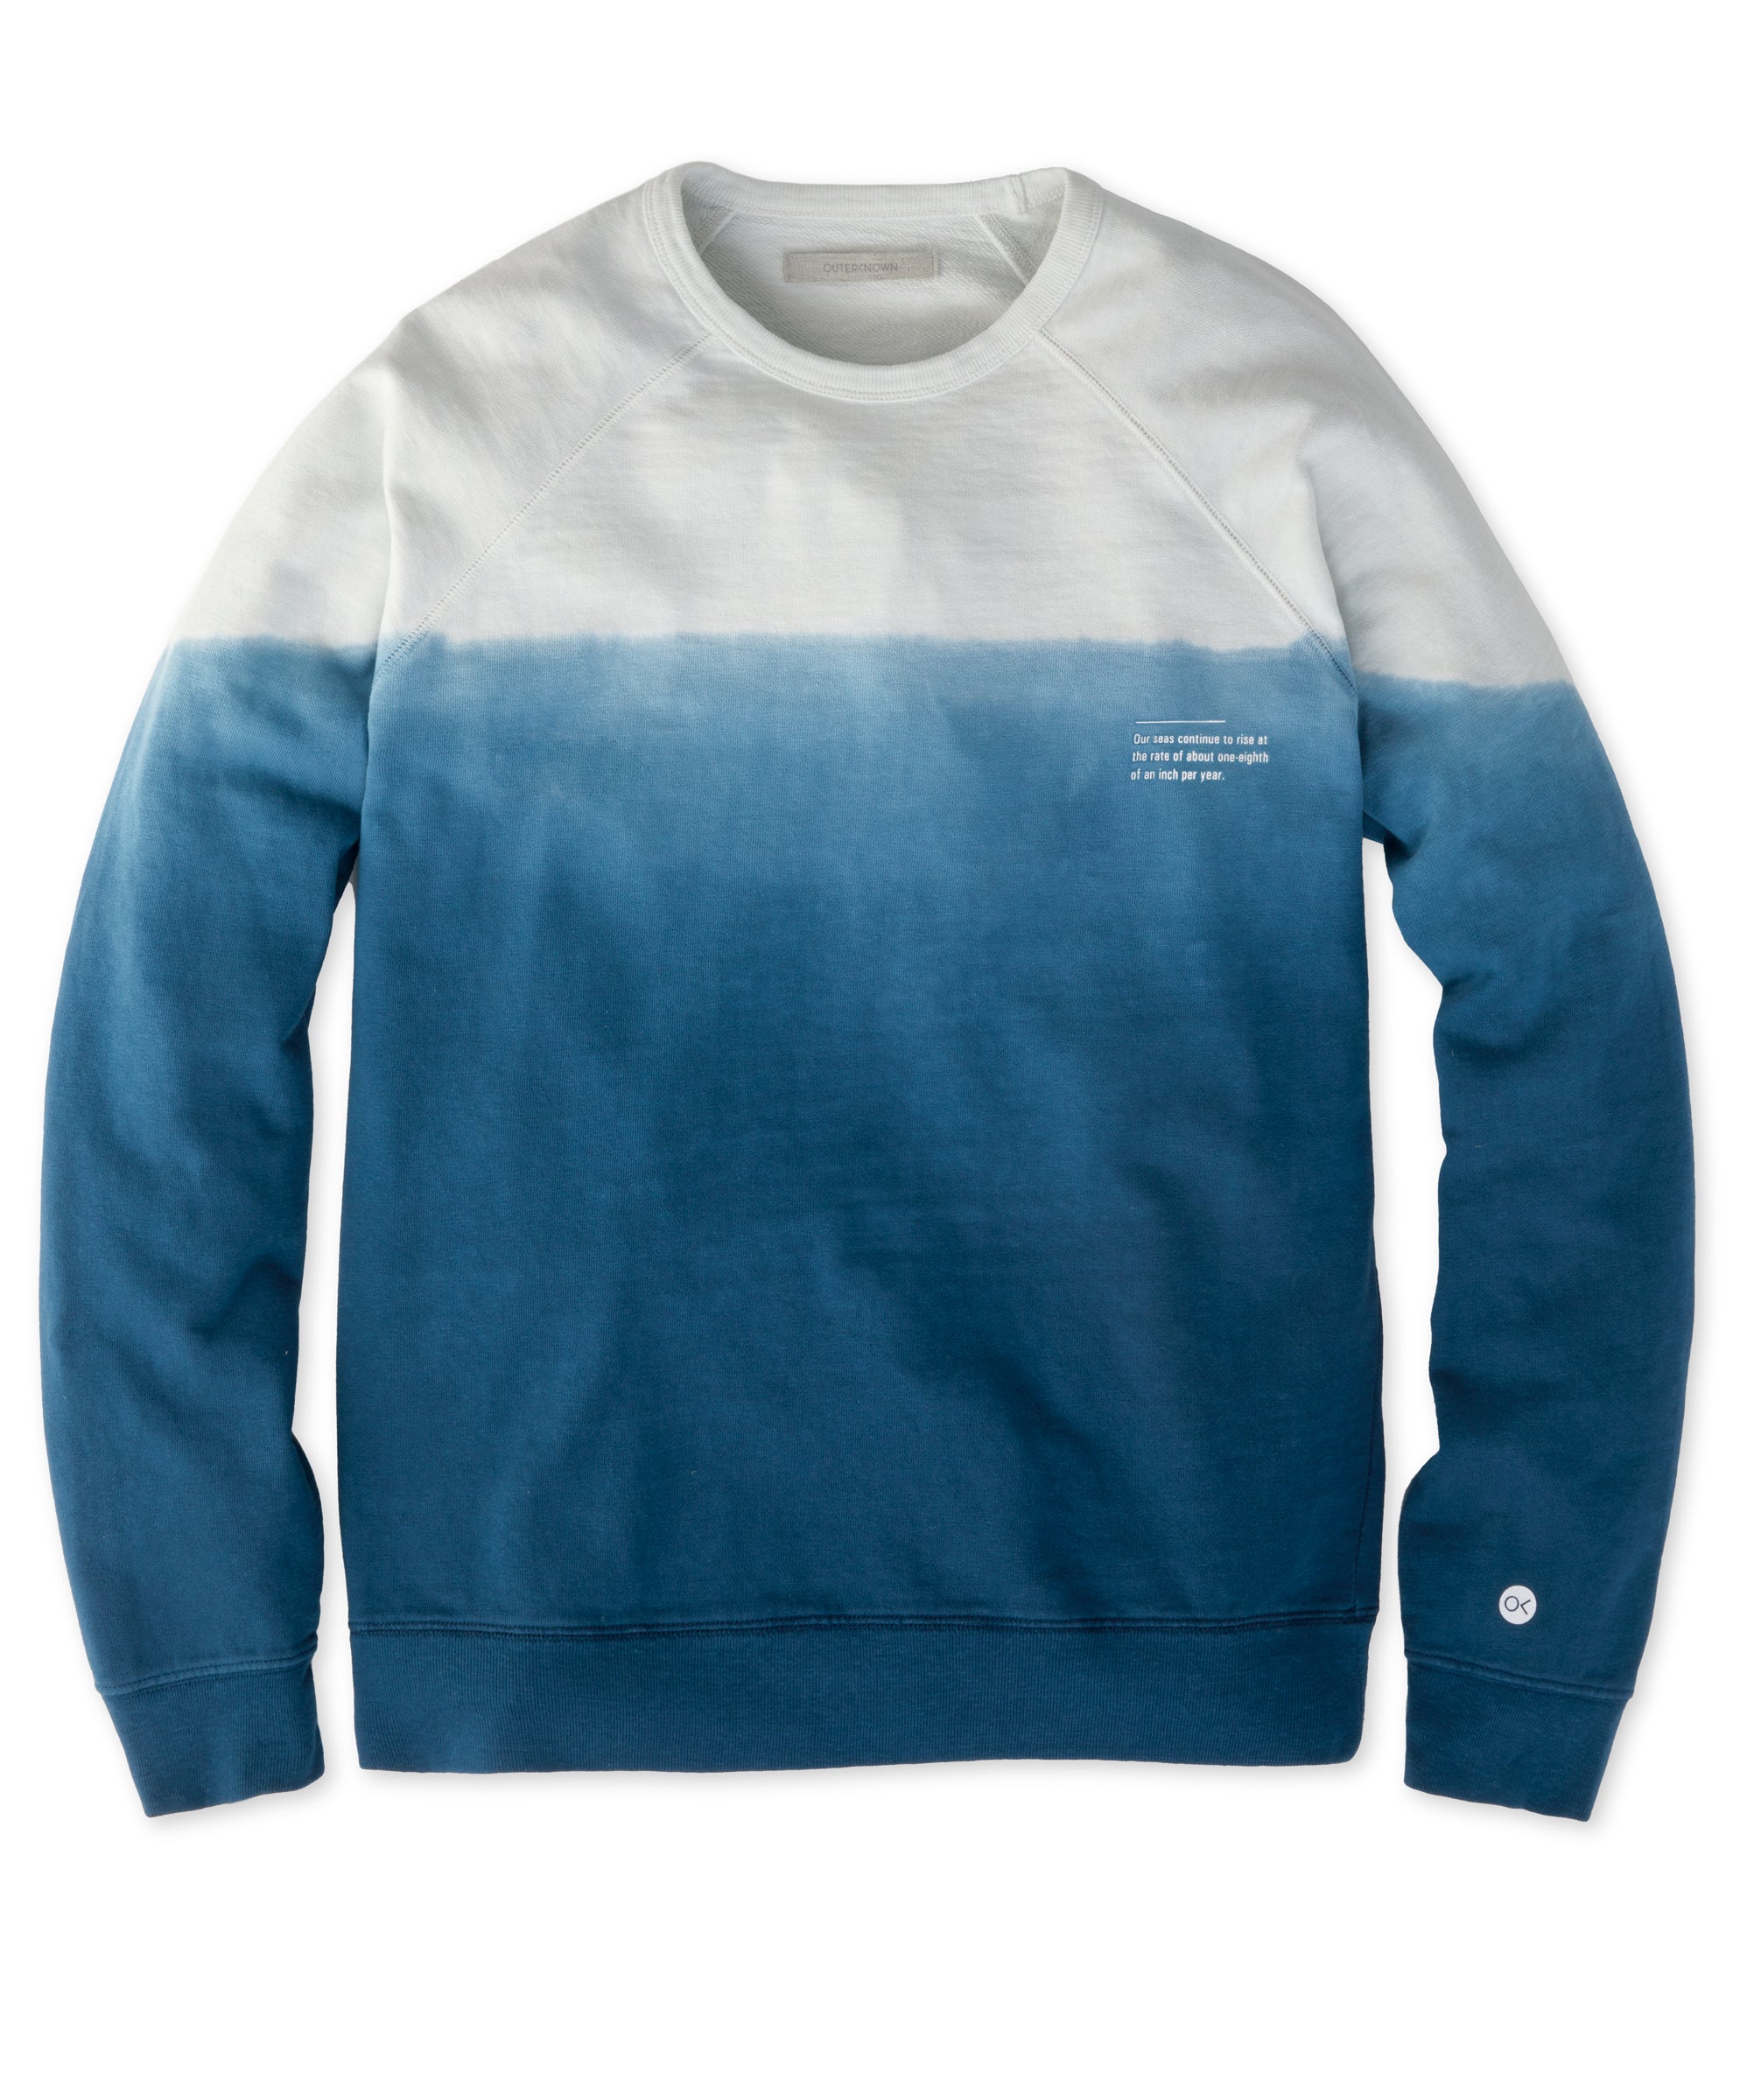 Rising Seas Crew | Men's Sweatshirts | Outerknown